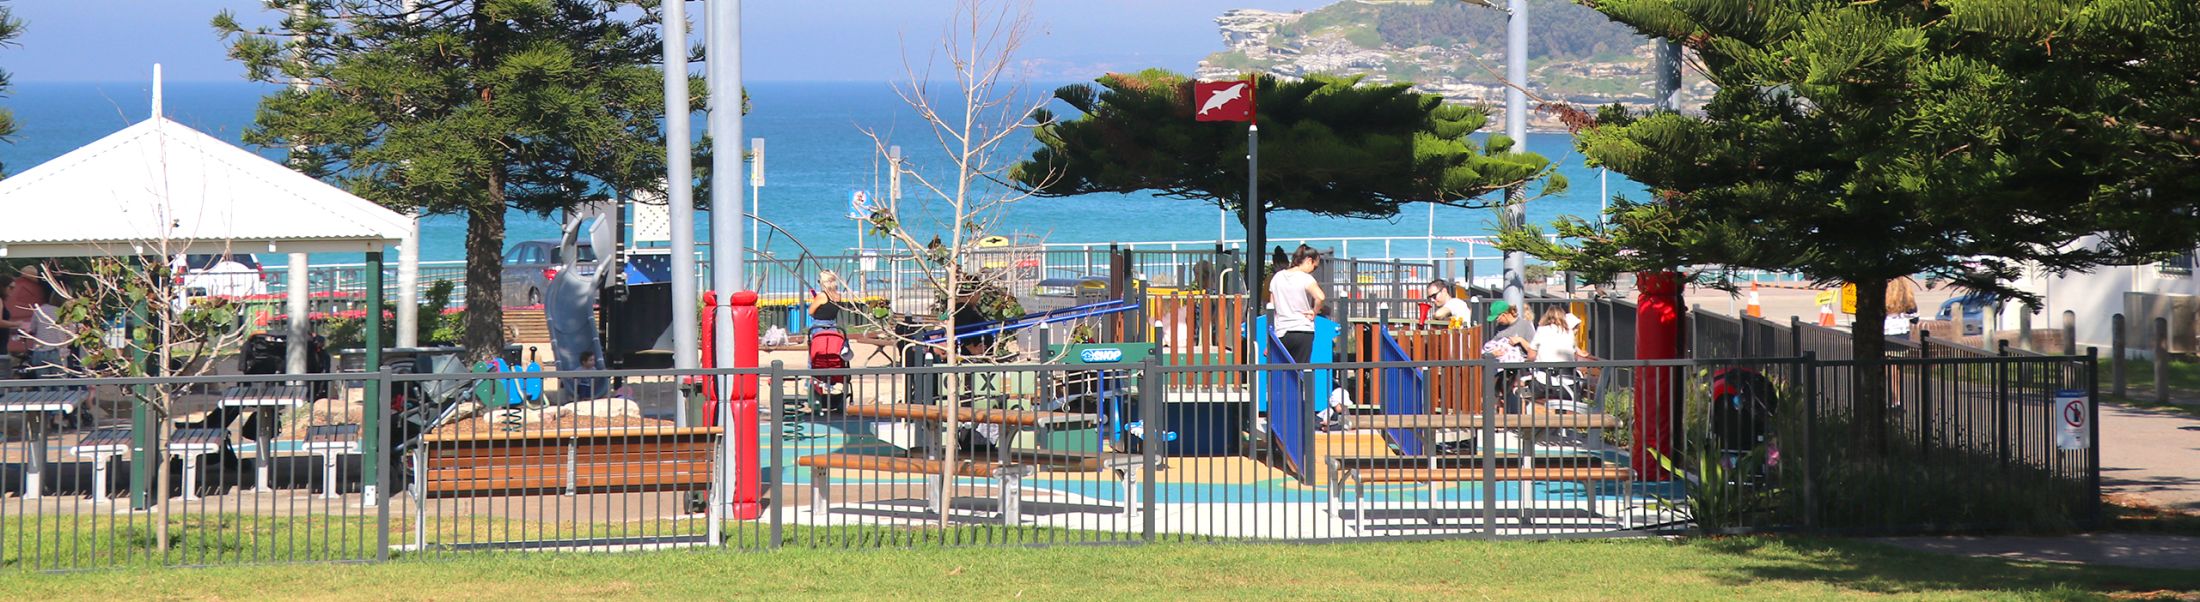 Bondi-beach-public playground_sydney_nsw